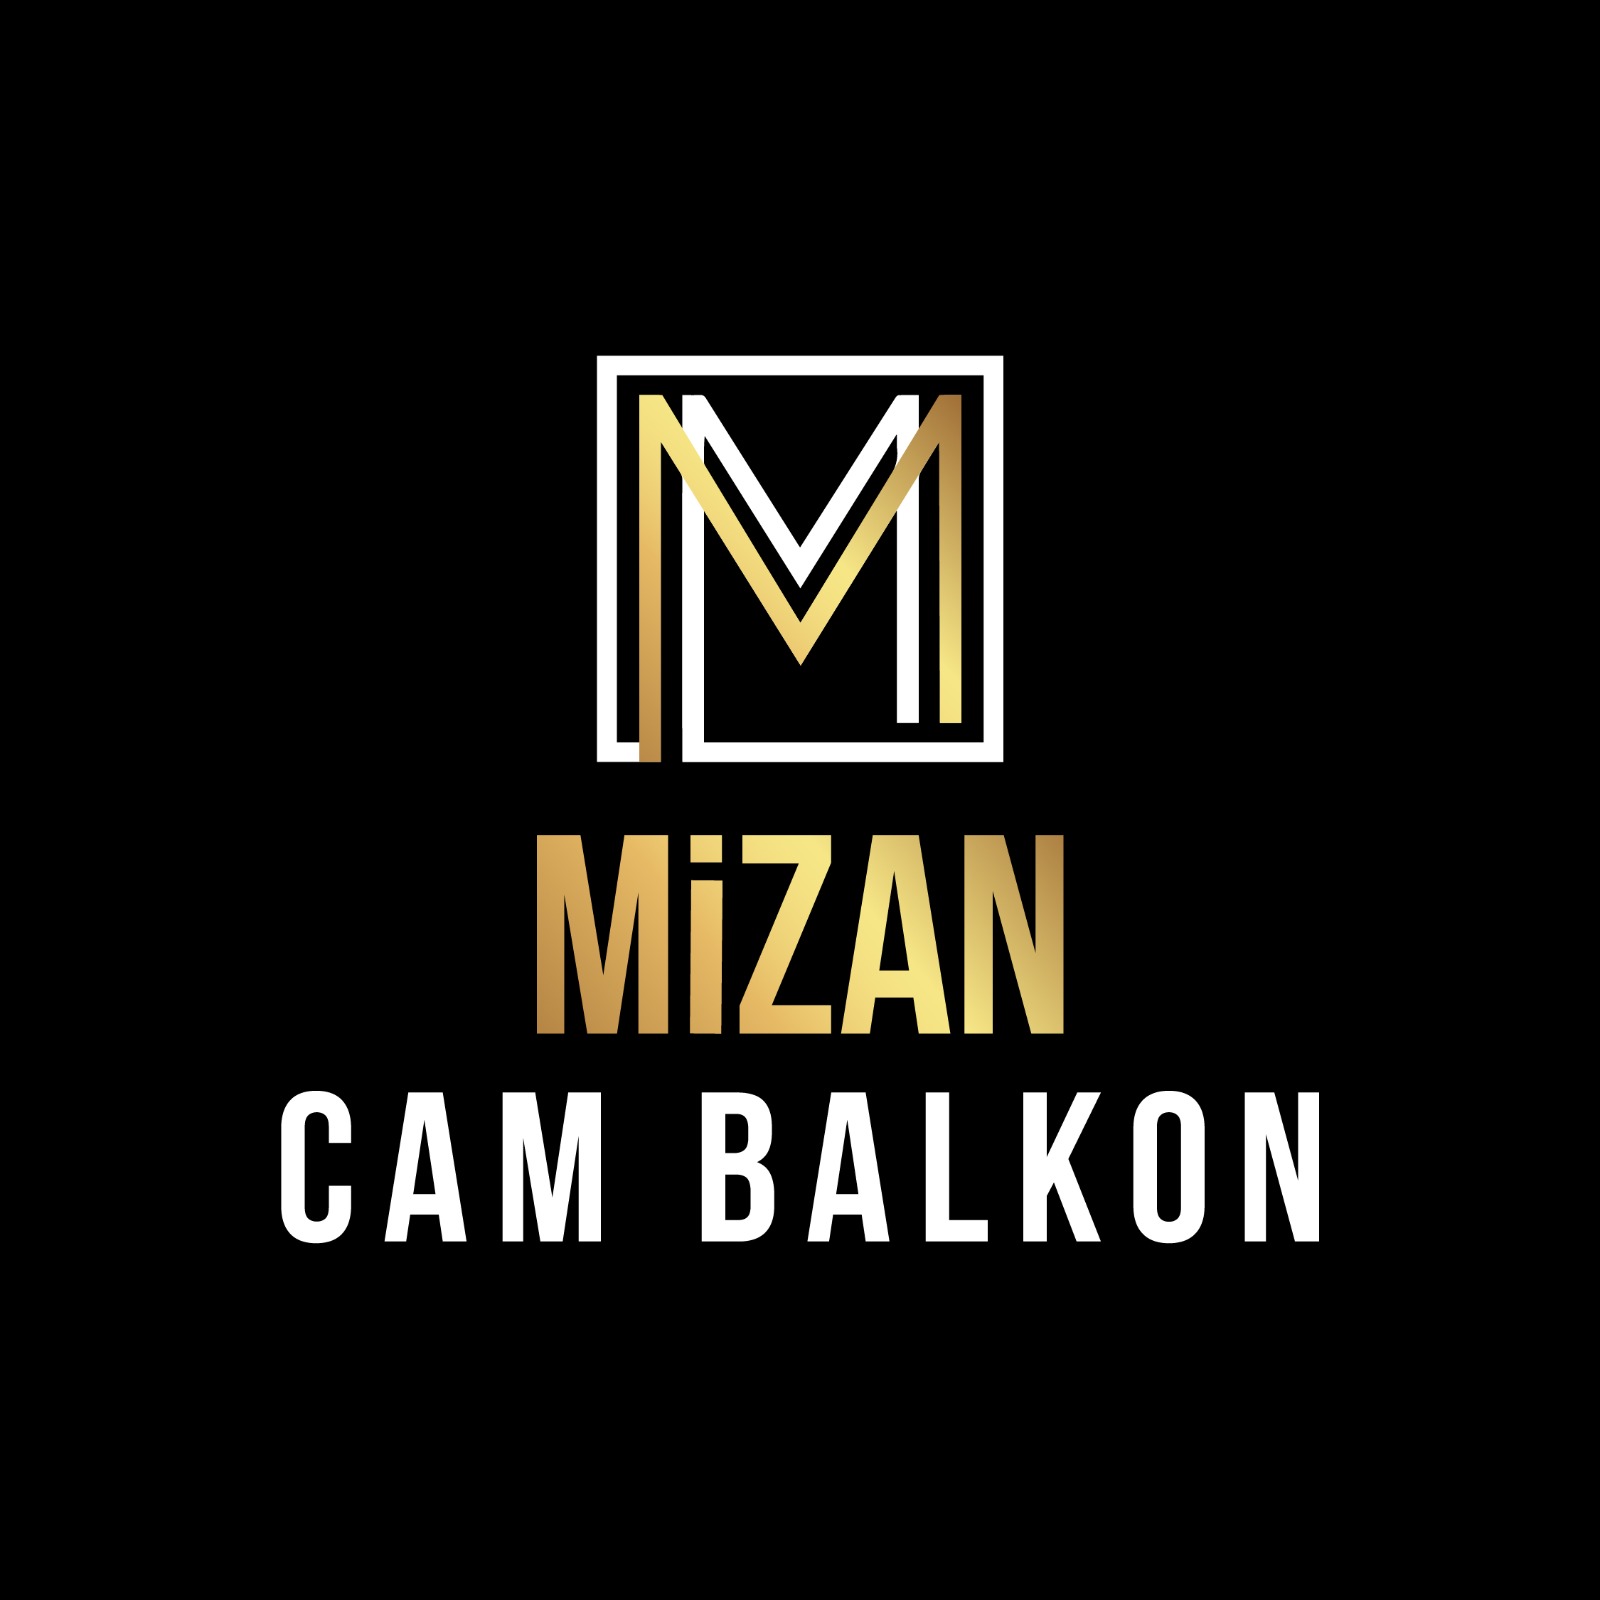 Mizan Cam Balkon